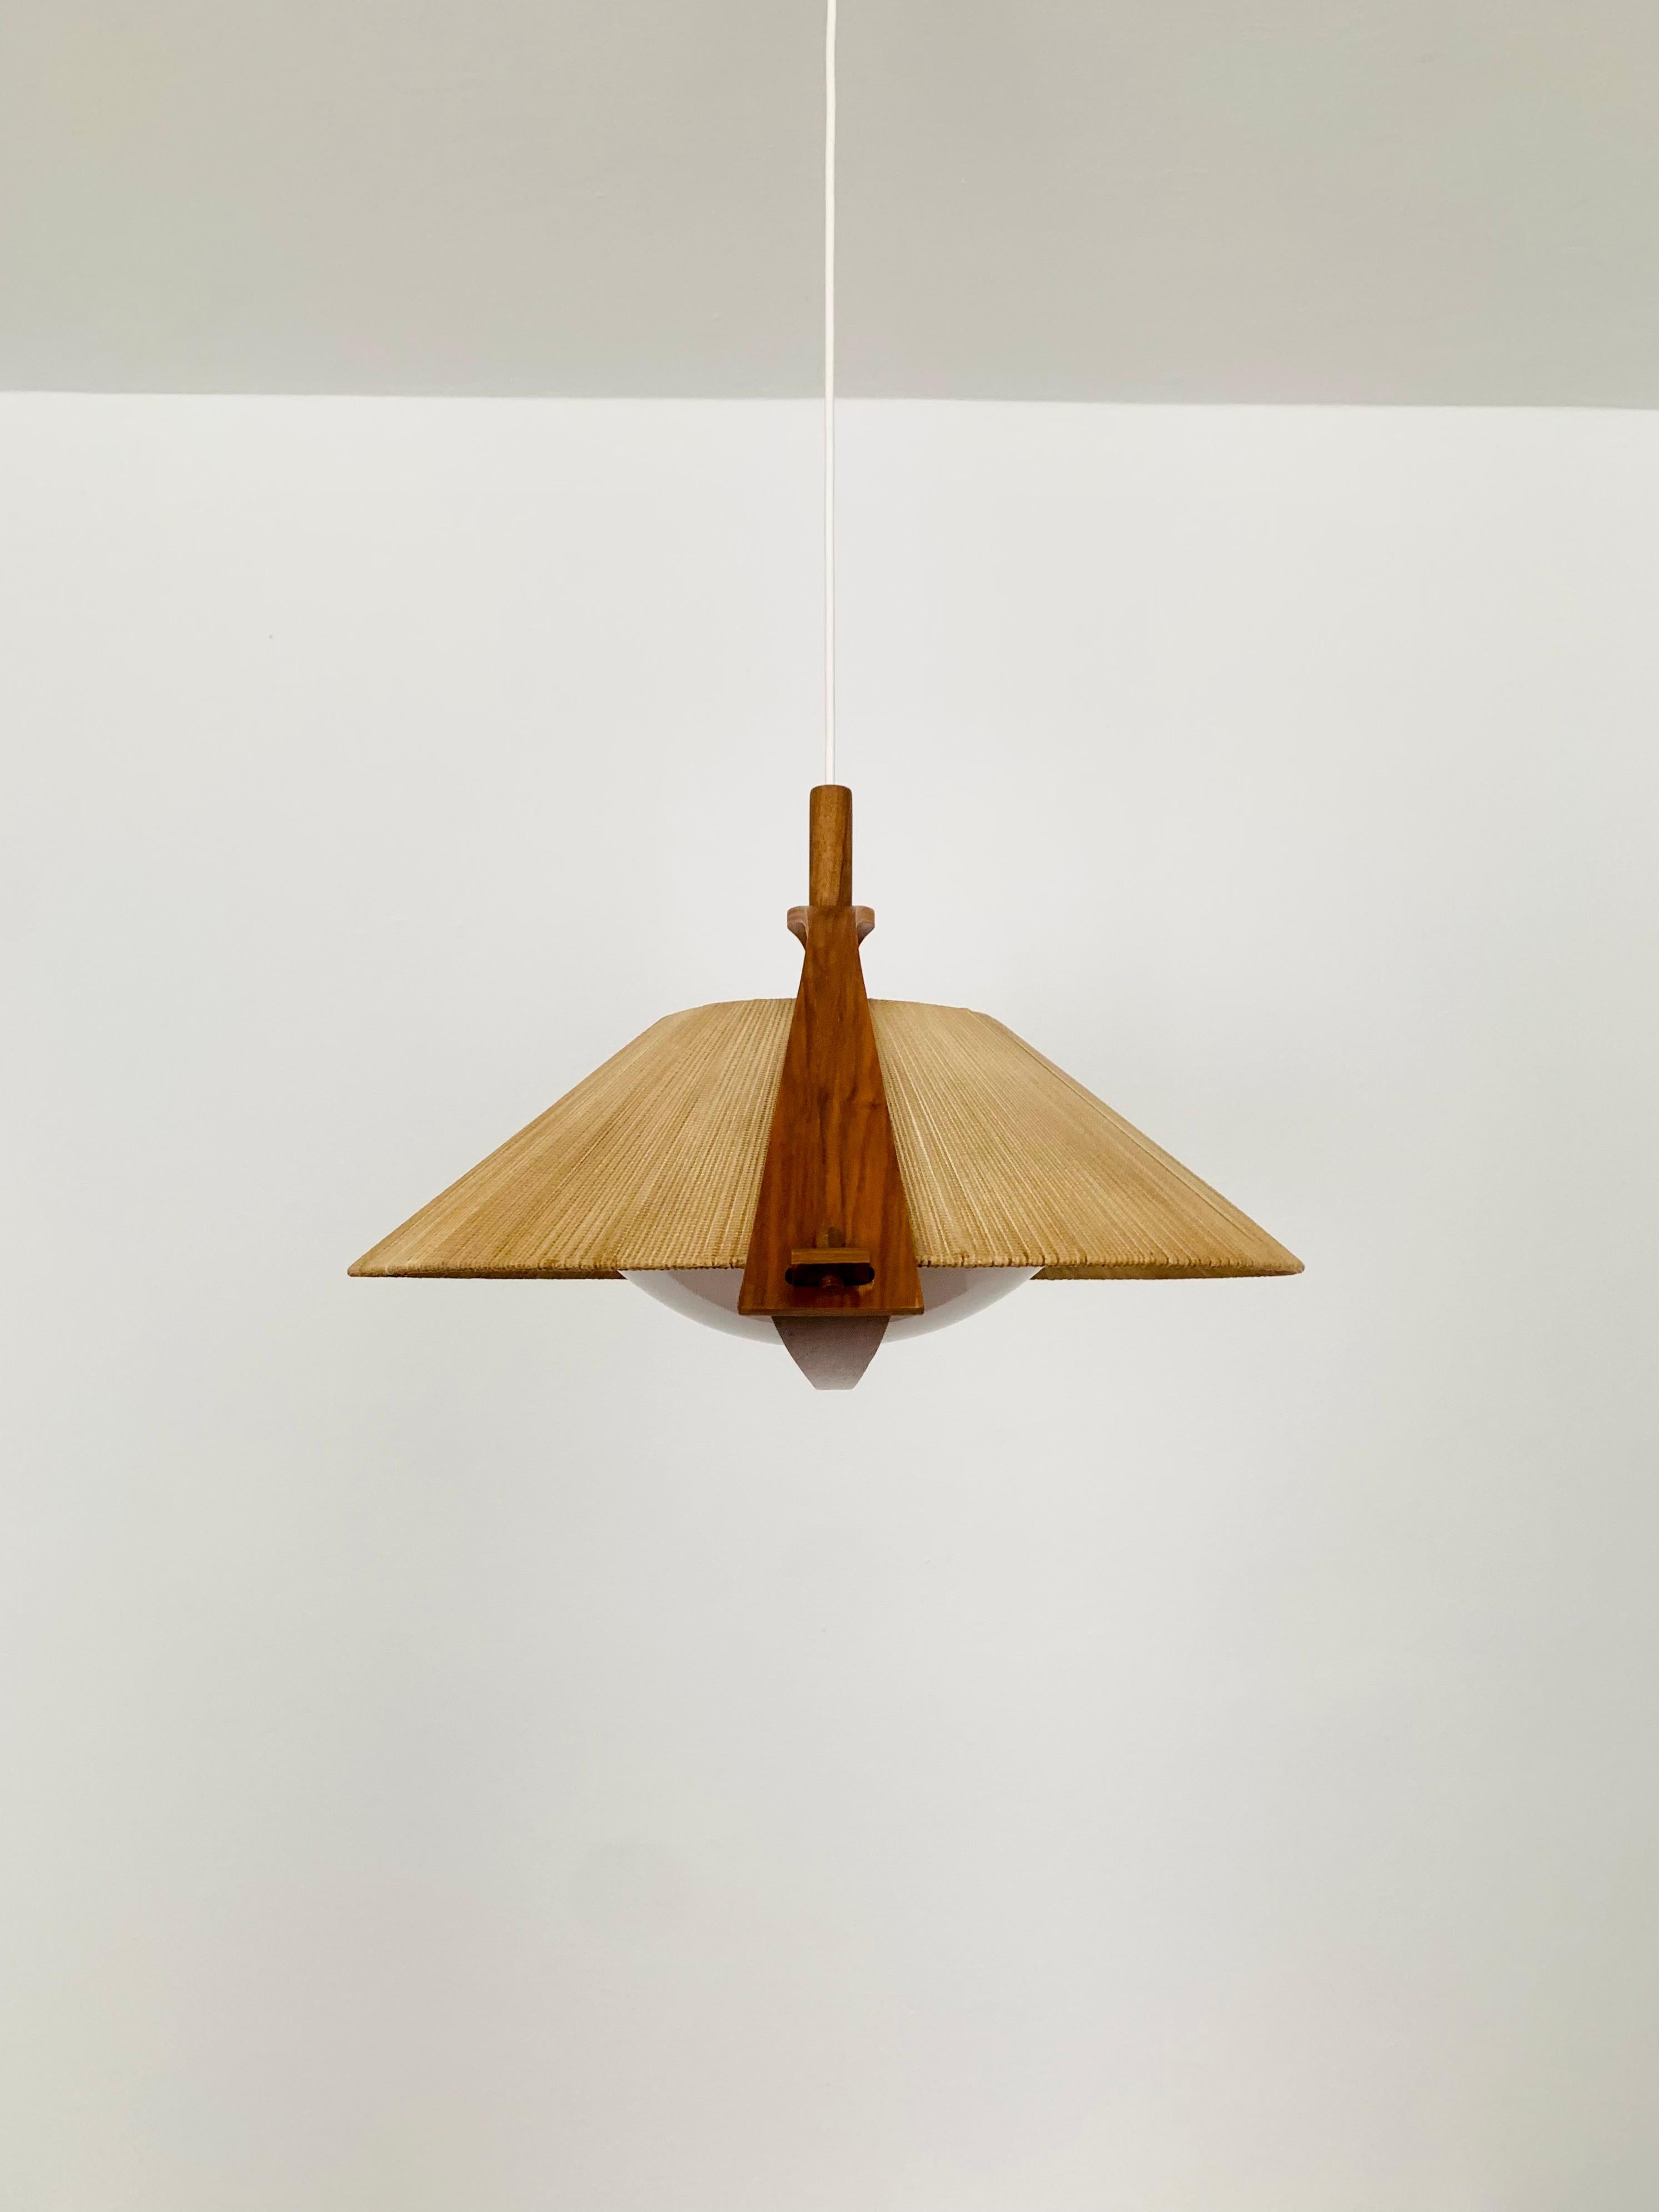 Raffia Bast and Walnut Pendant Lamp by Temde In Good Condition For Sale In München, DE